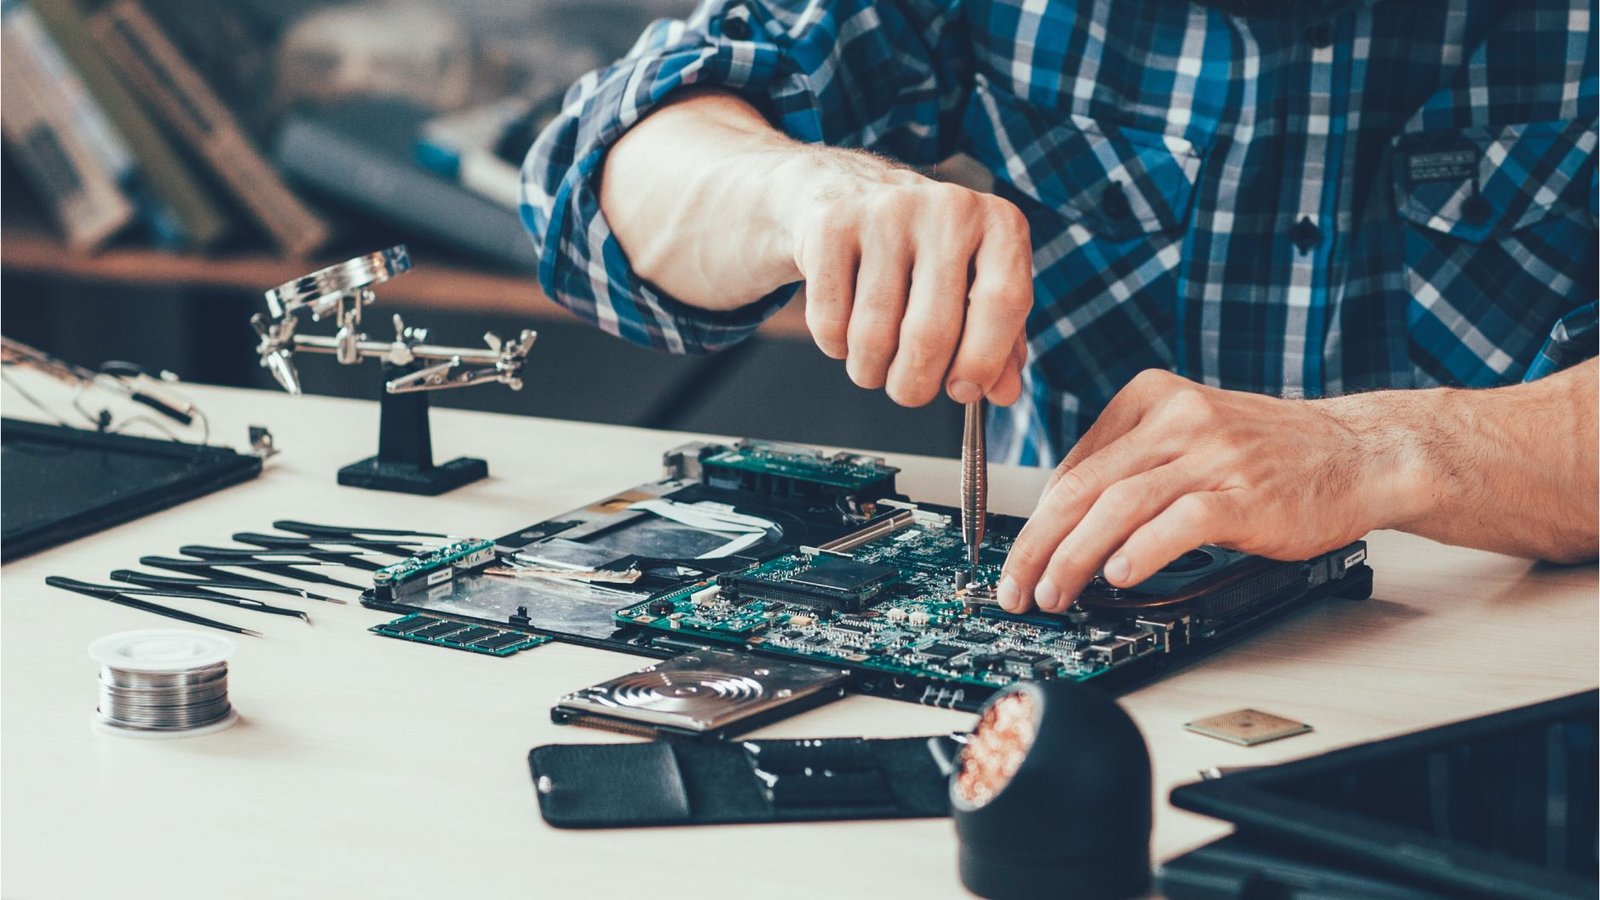 a technician repair computer motherboard